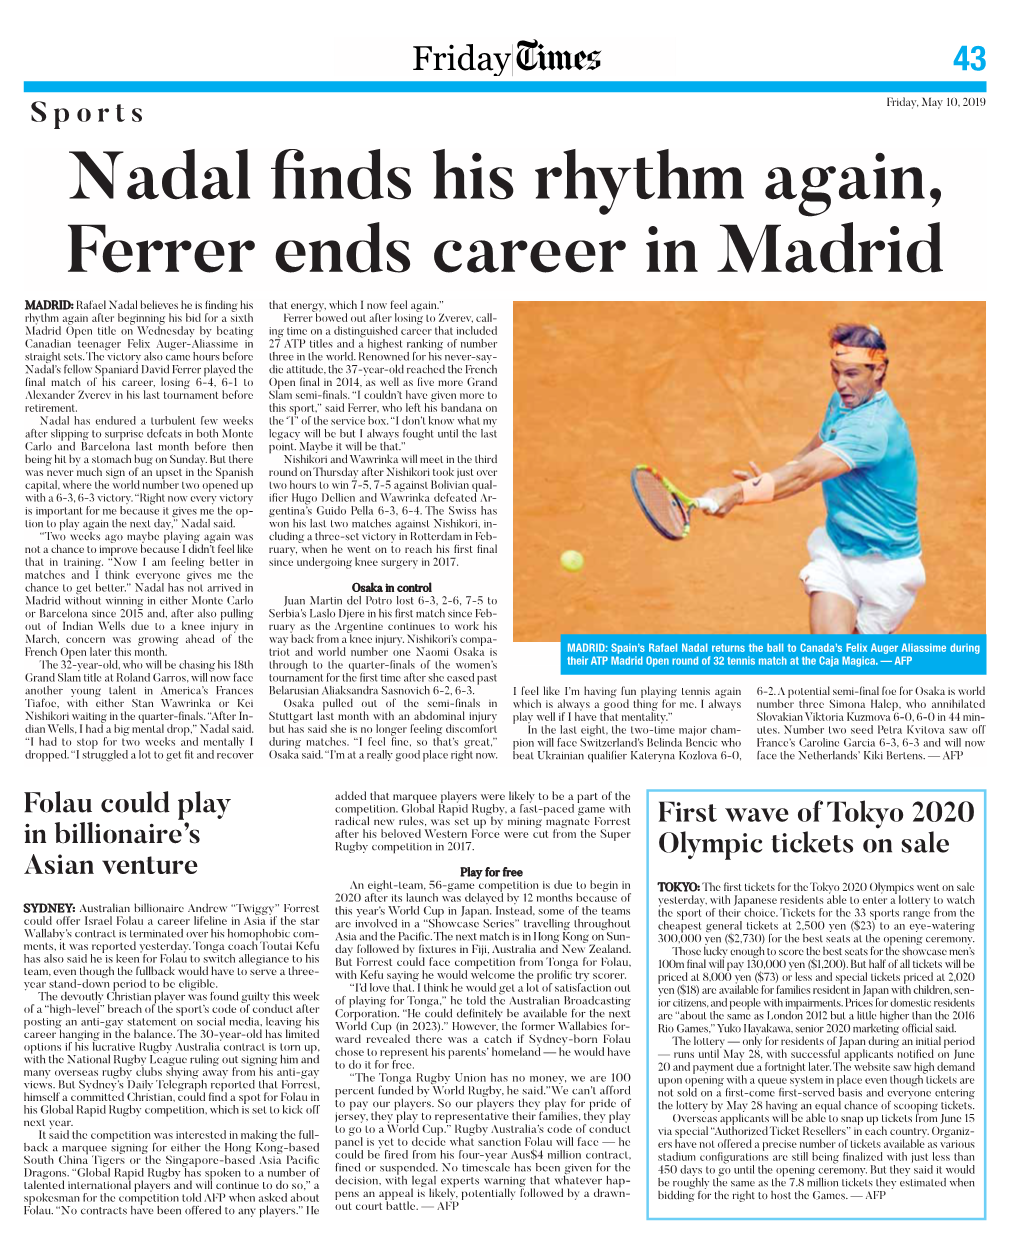 Nadal Finds His Rhythm Again, Ferrer Ends Career in Madrid